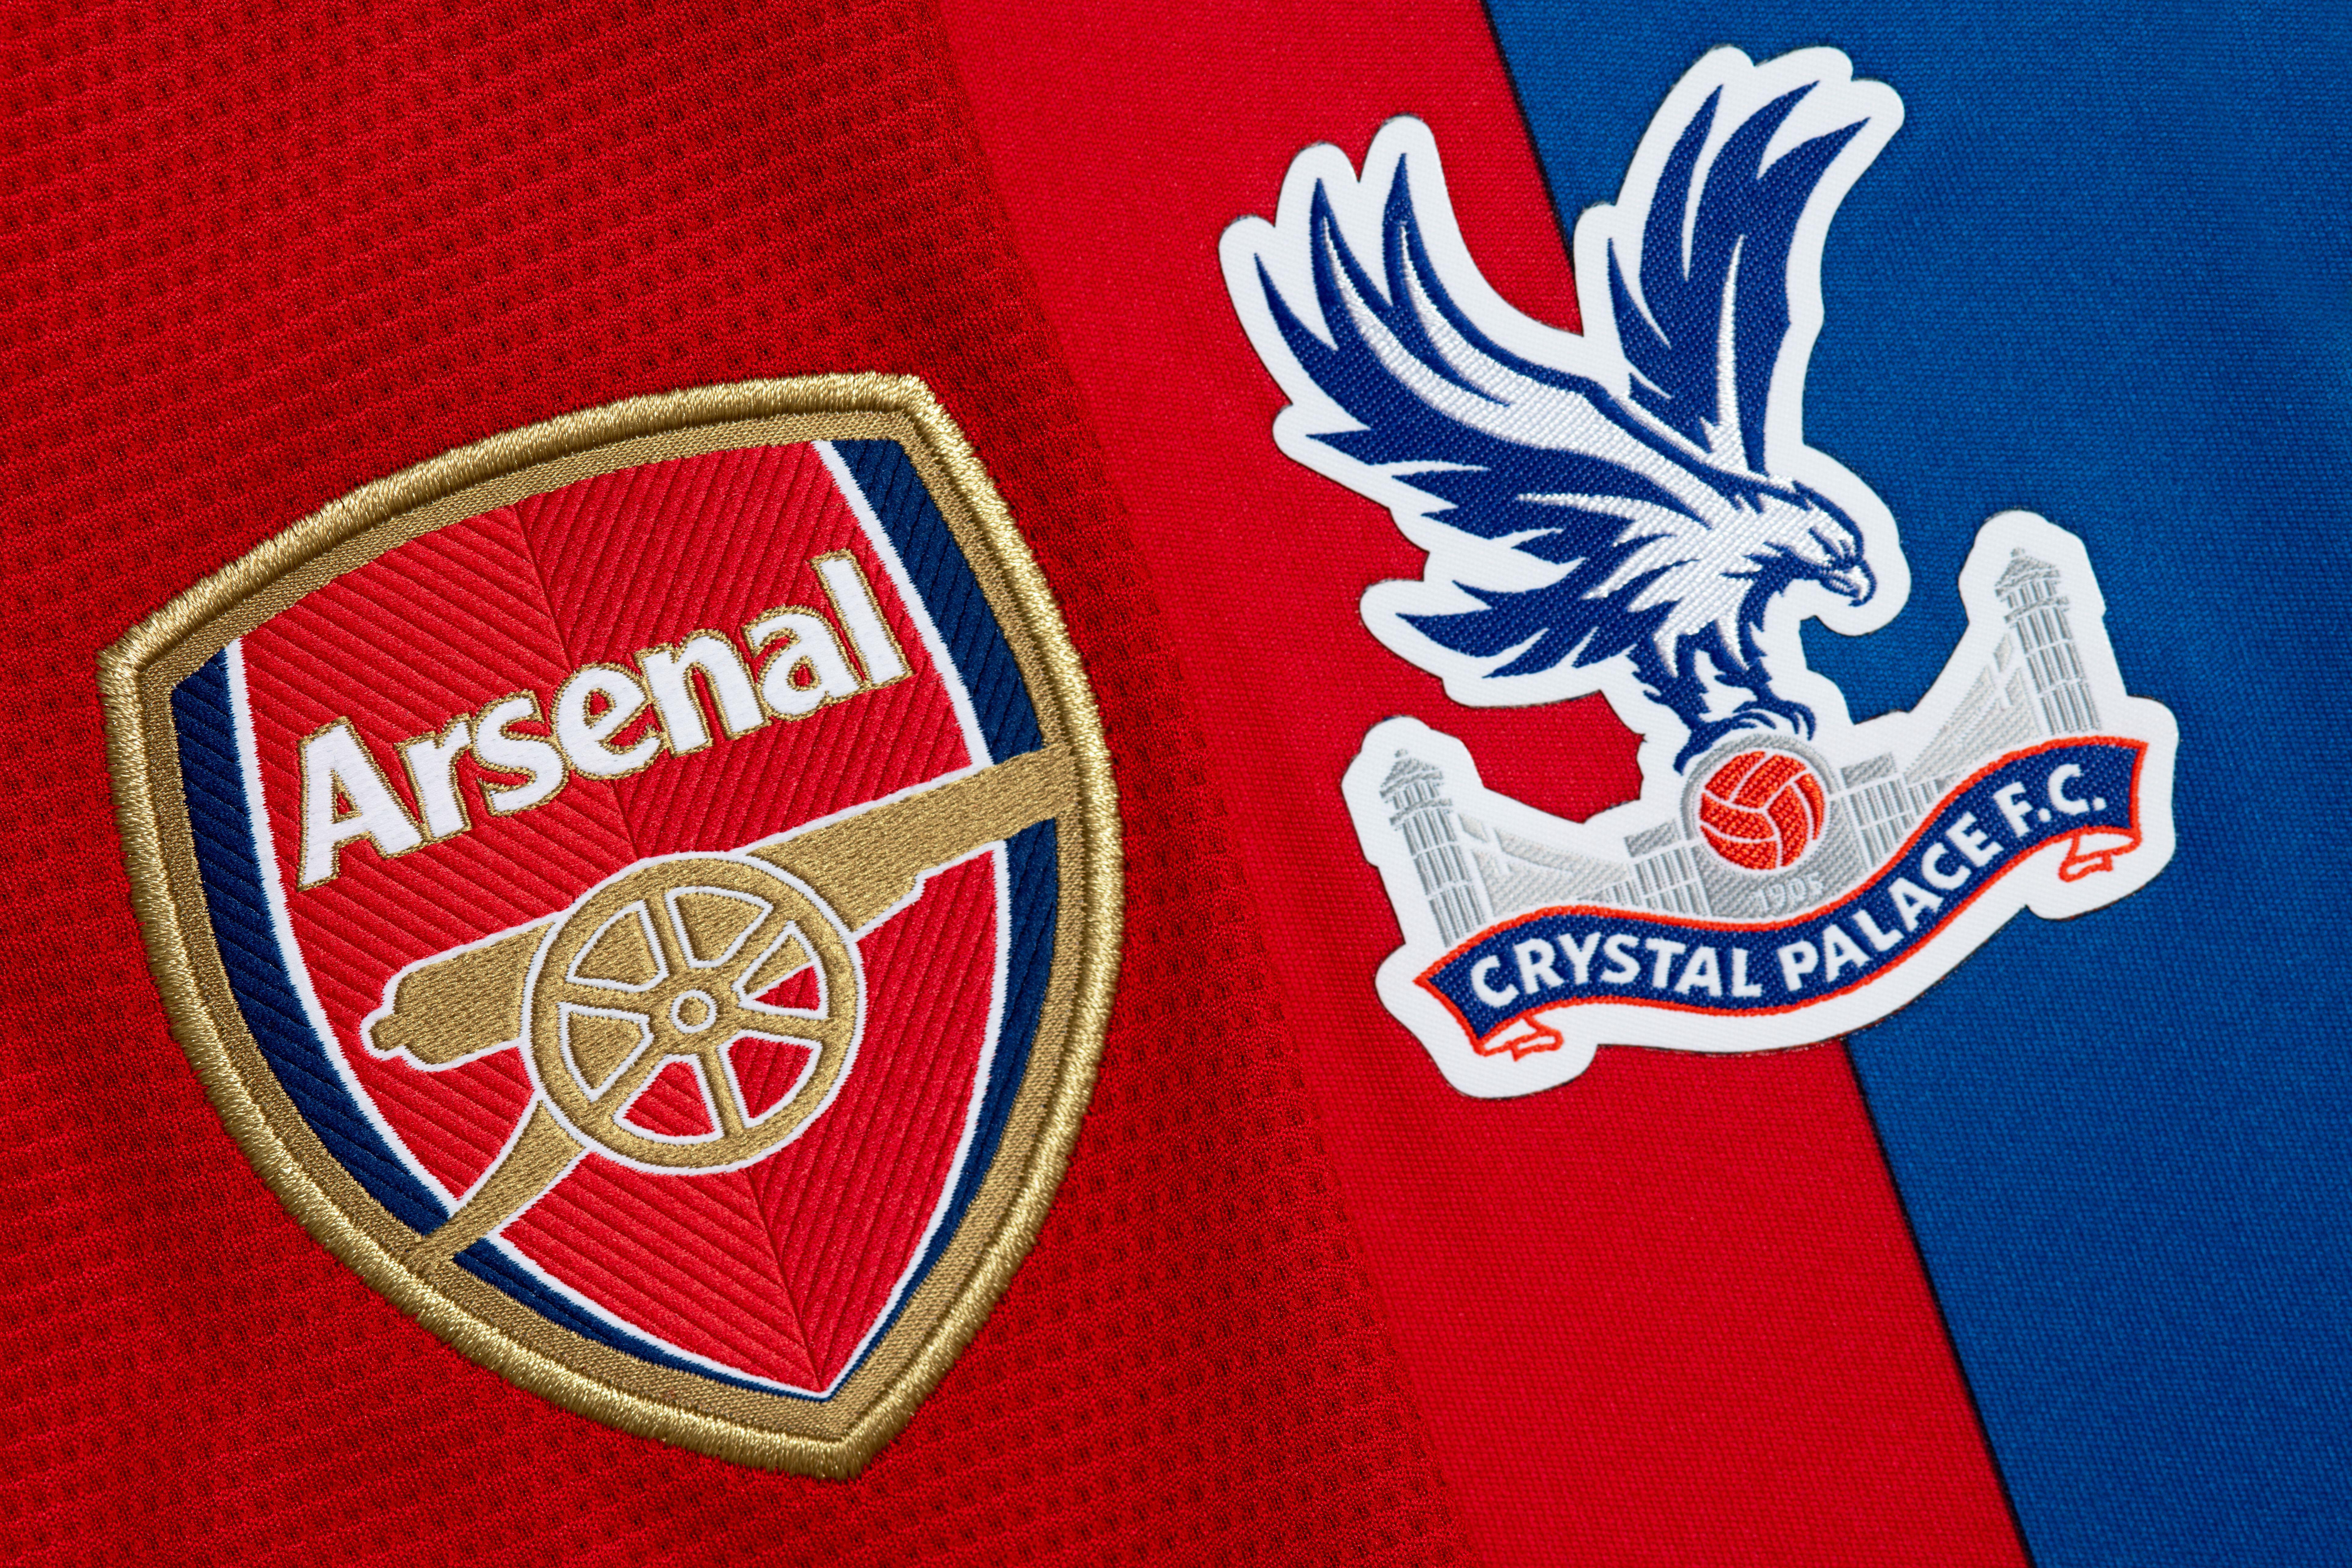 Crystal Palace 1 - 2 Arsenal - Match Report